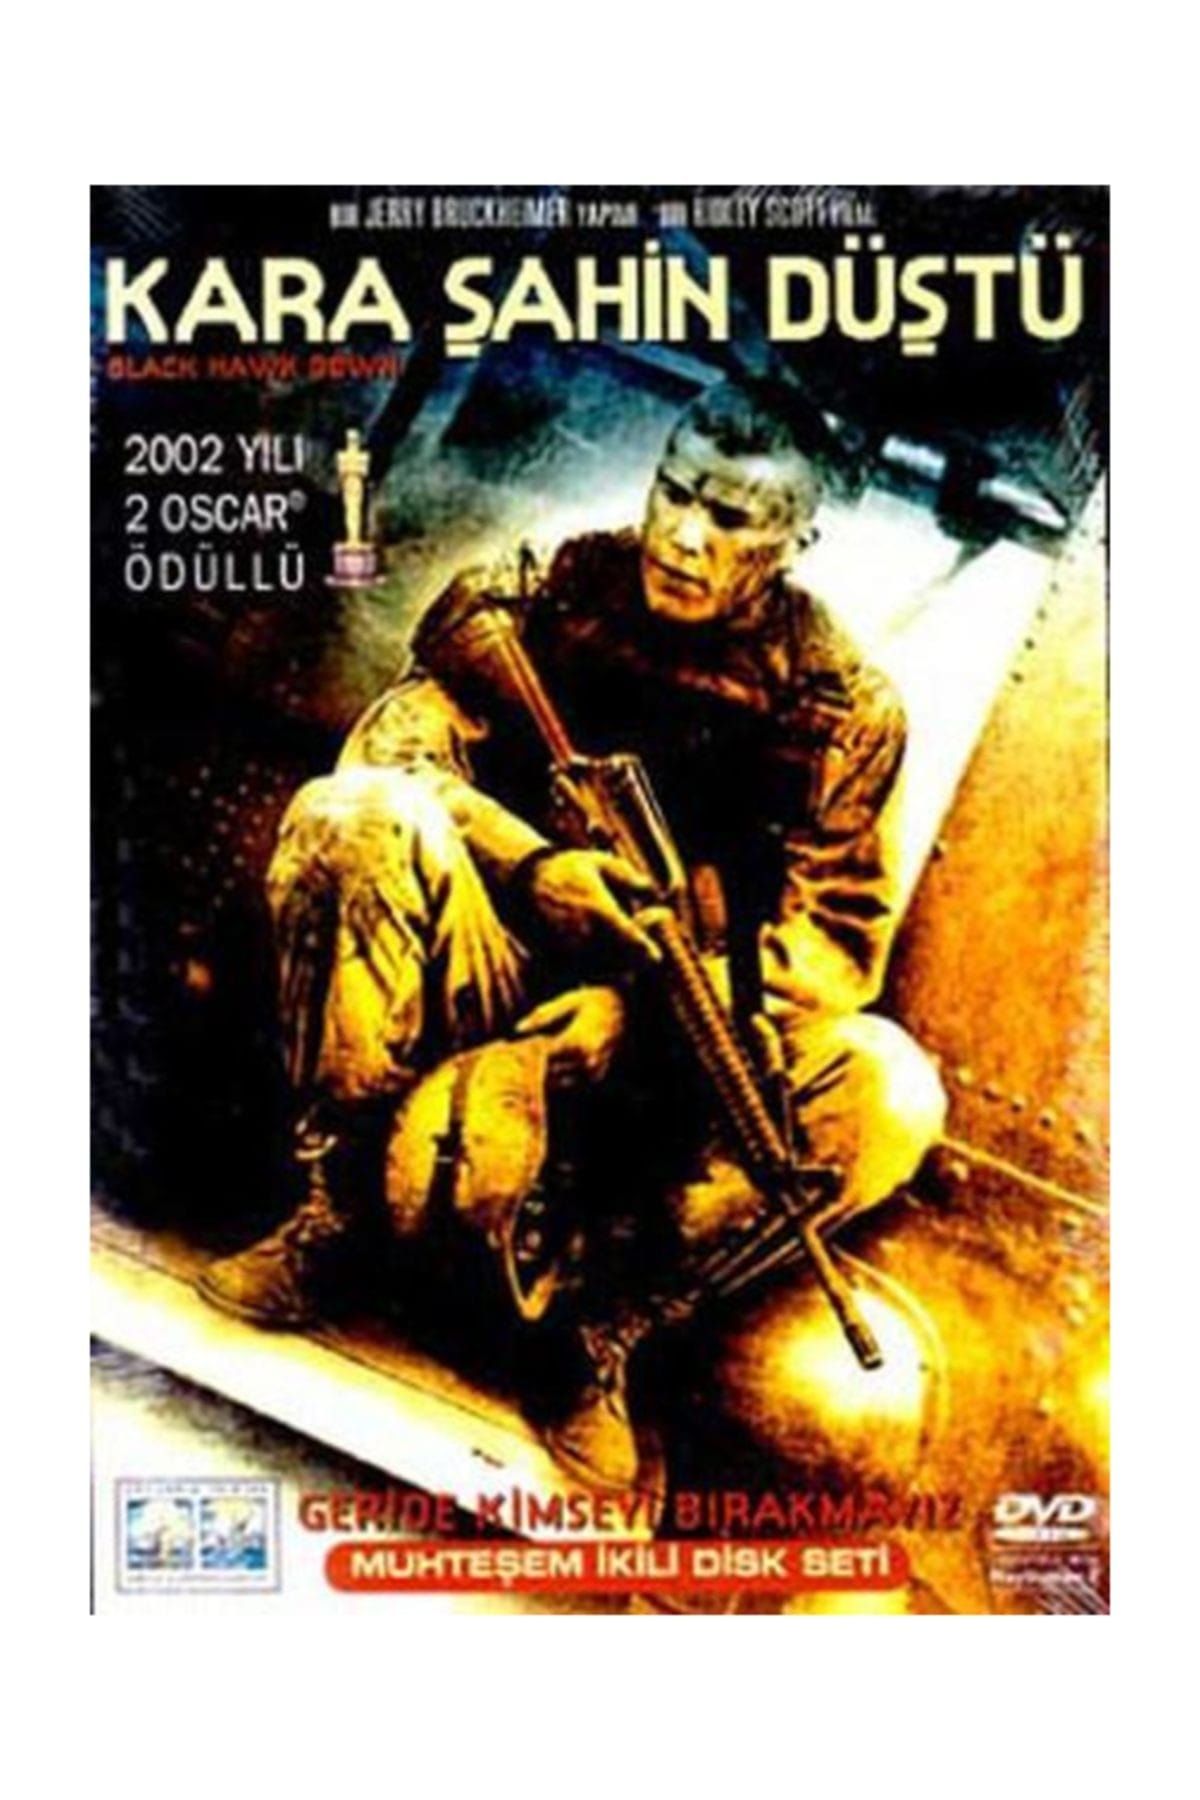 Black Hawk Down (2001) Theatrical Cut 448Kbps 23.976Fps 48Khz 5.1Ch DVD Turkish Audio TAC